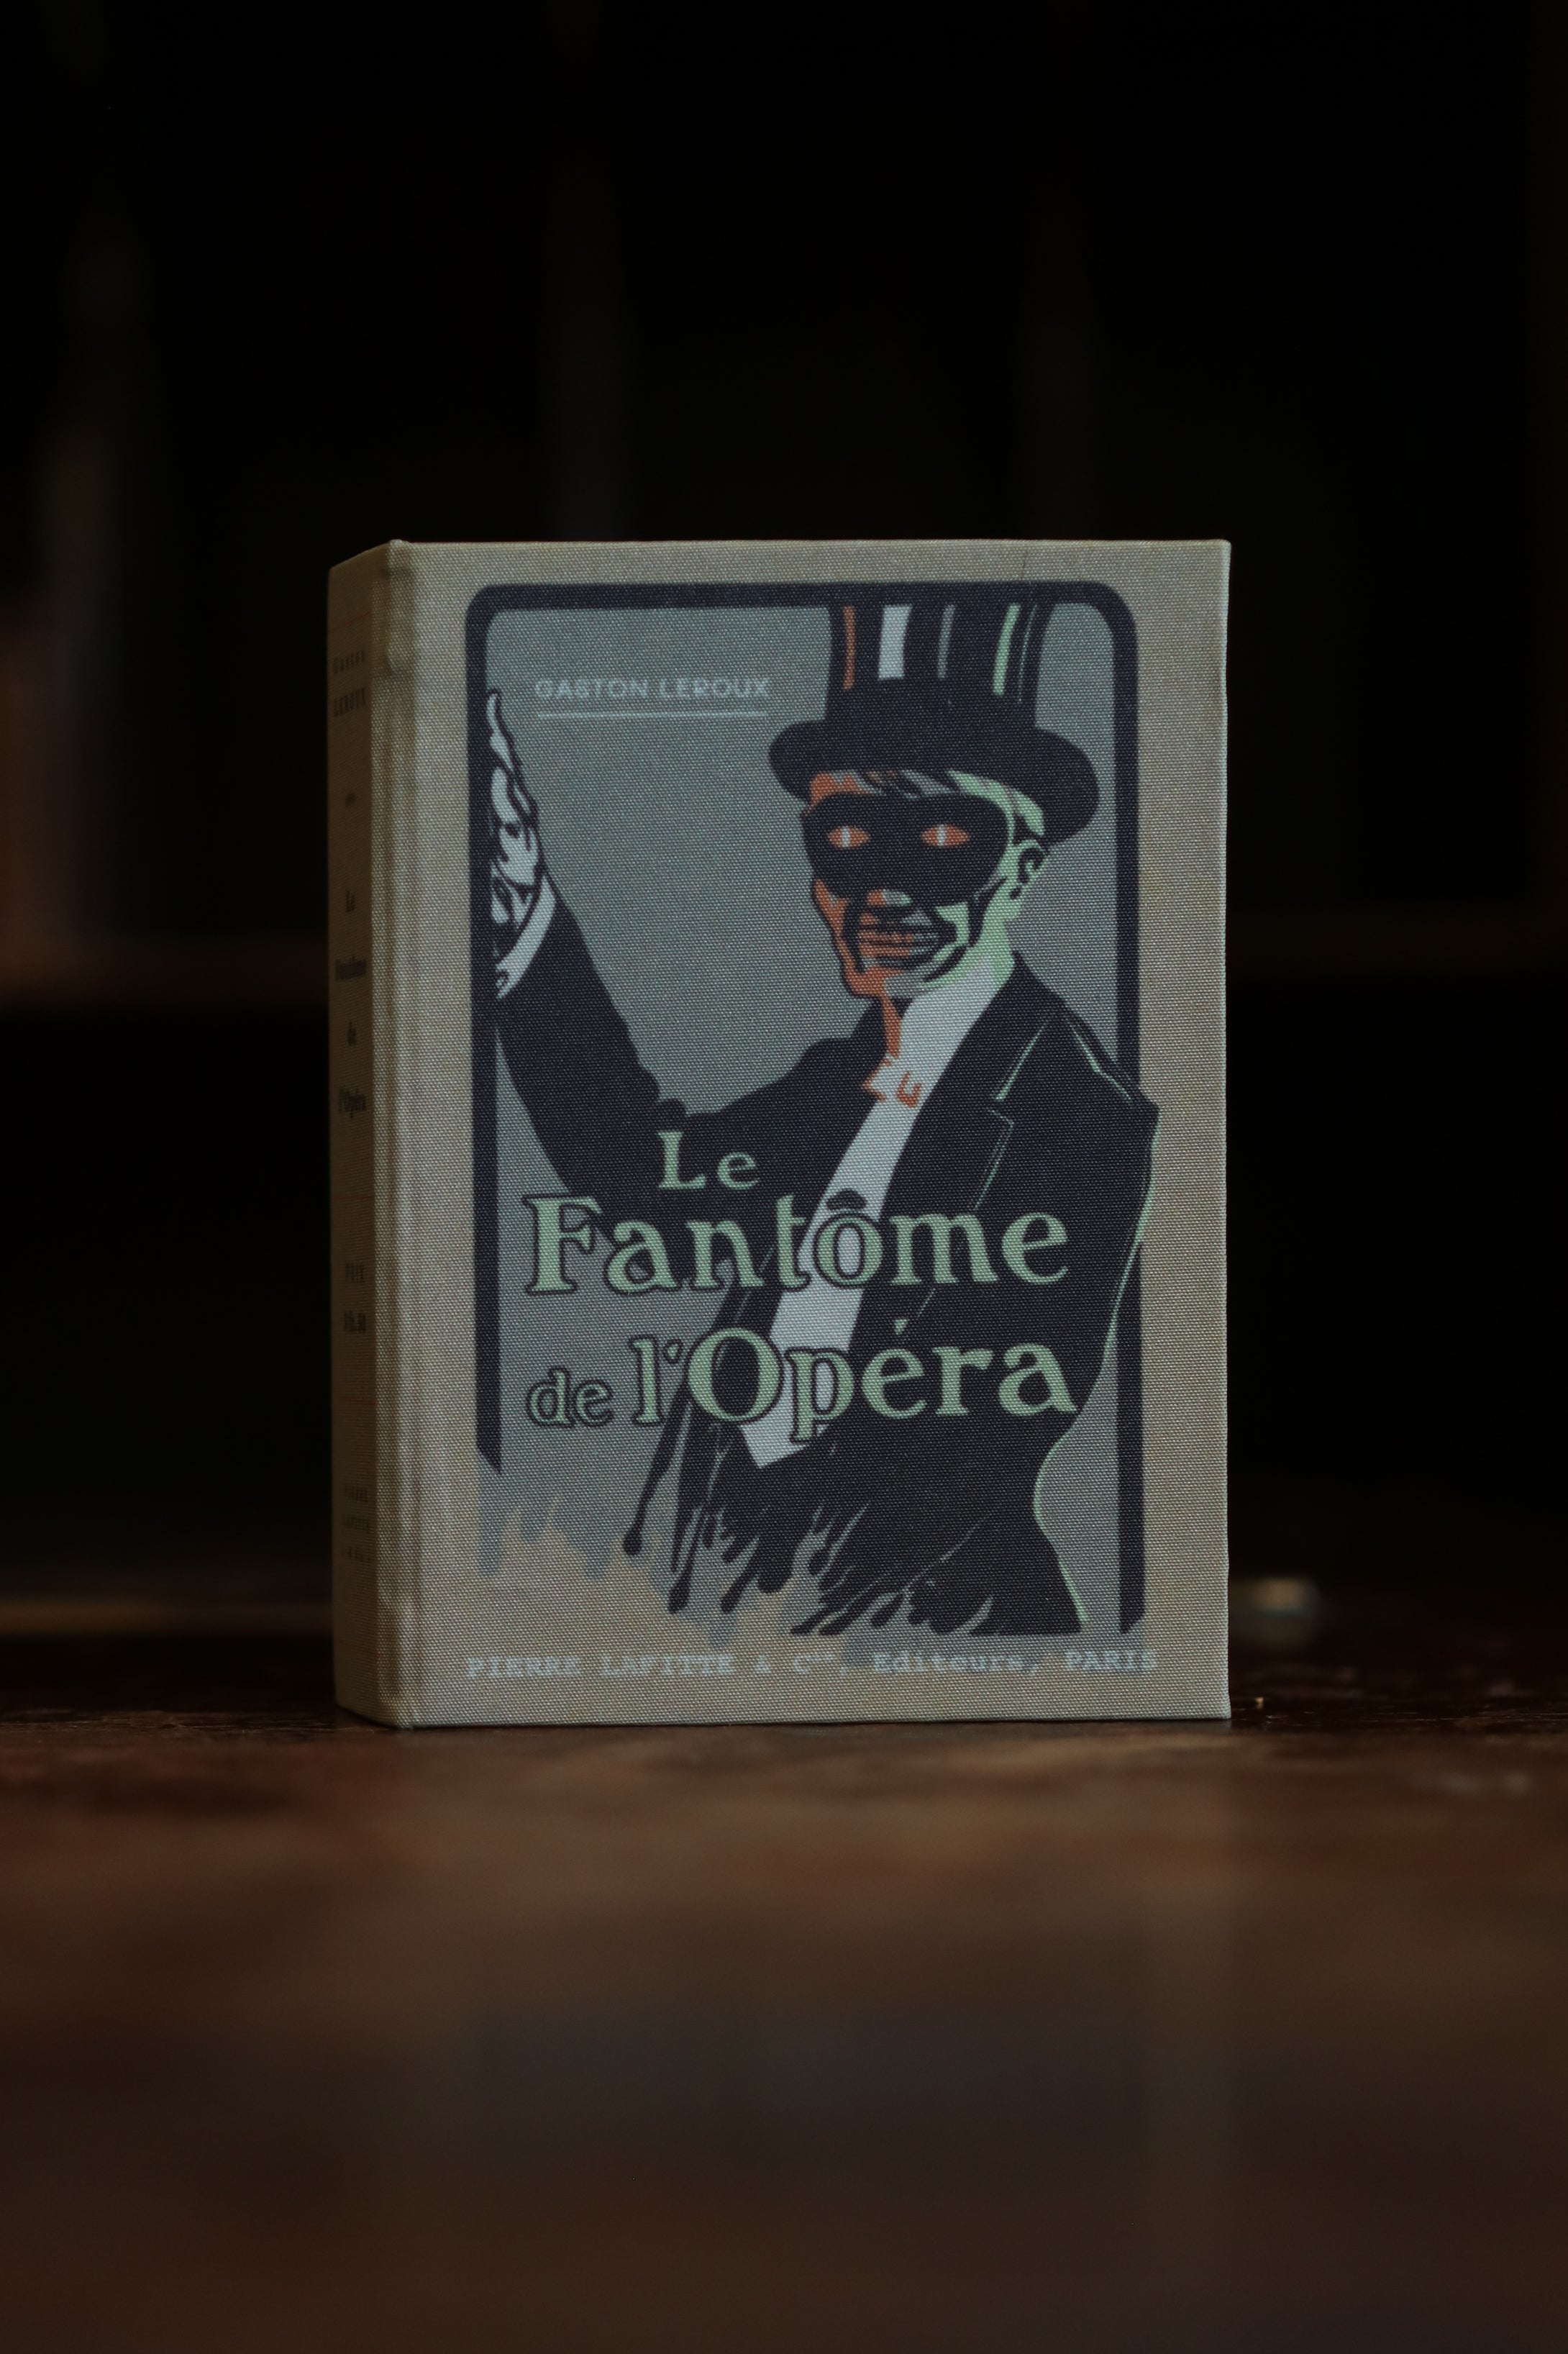 BW Le Fantôme de l'Opéra by Gaston Leroux 1910 (Phantom of the Opera)